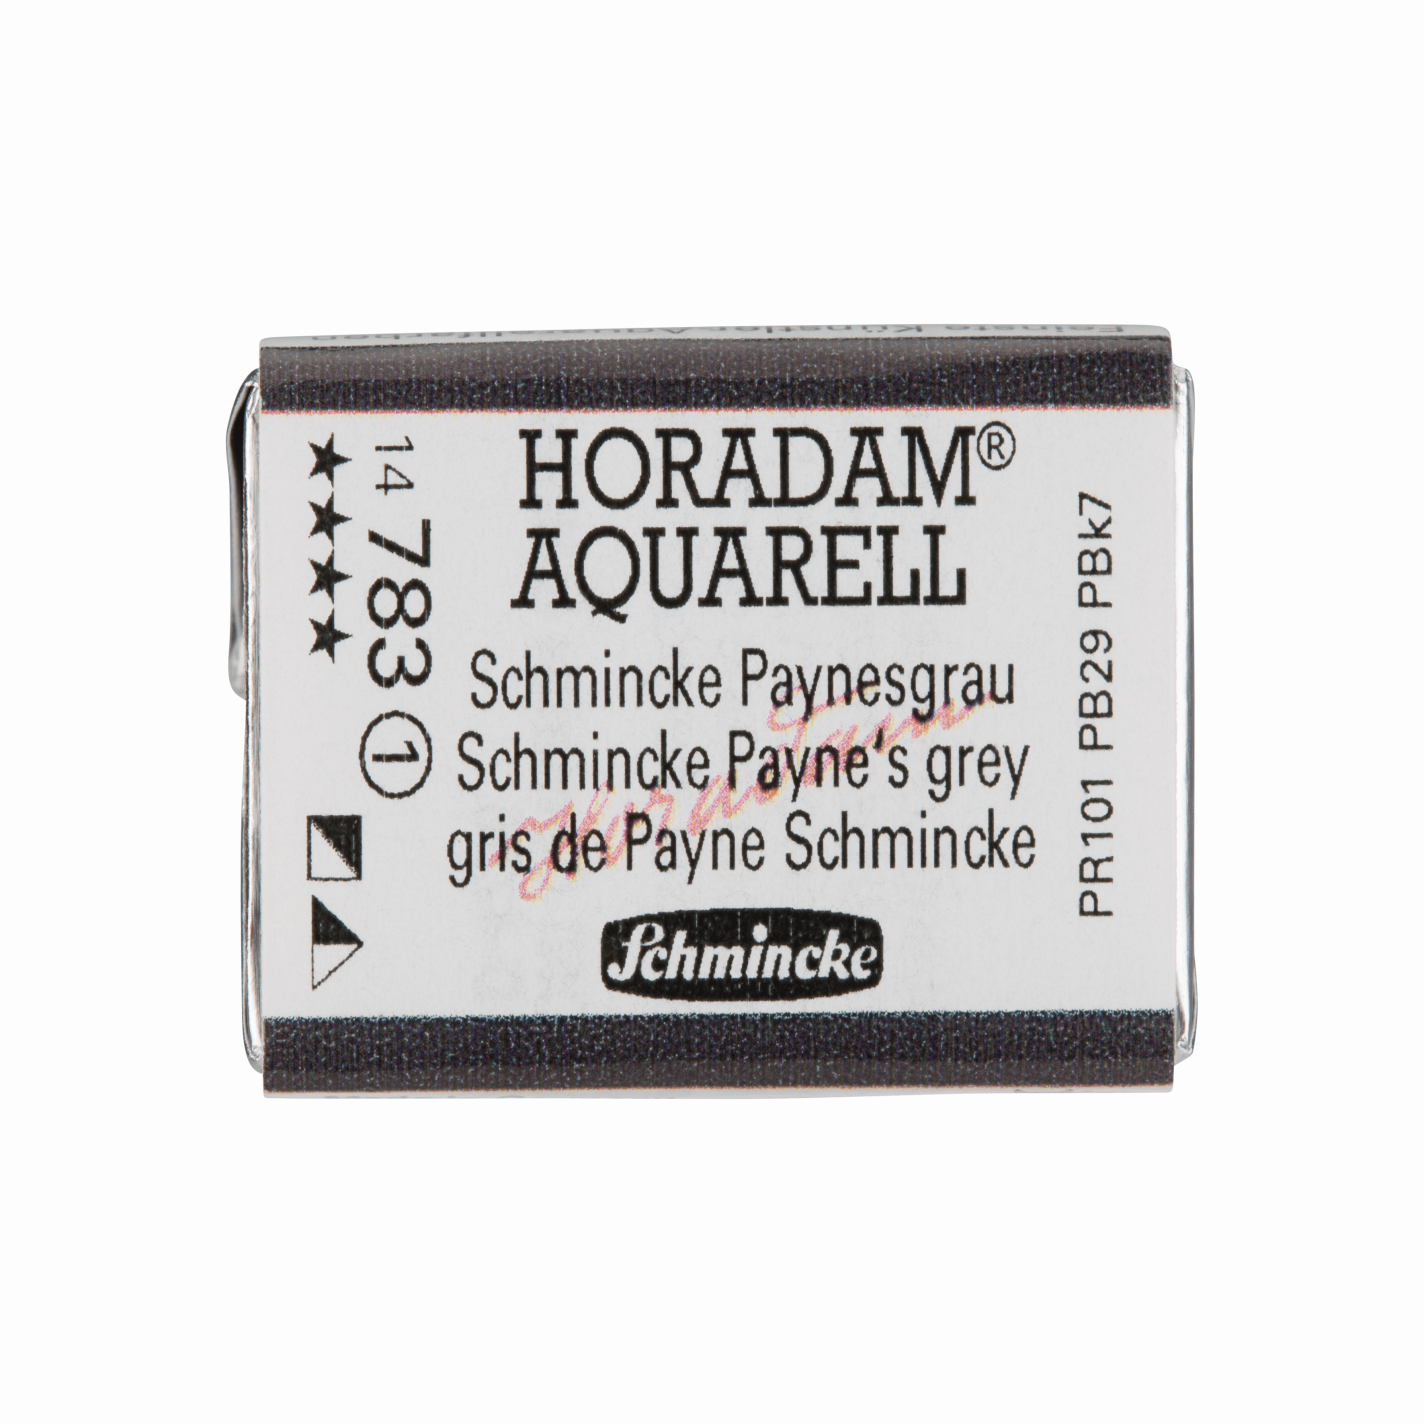 Schmincke Horadam Aquarell pans 1/1 pan Schmincke Payne‘s Grey